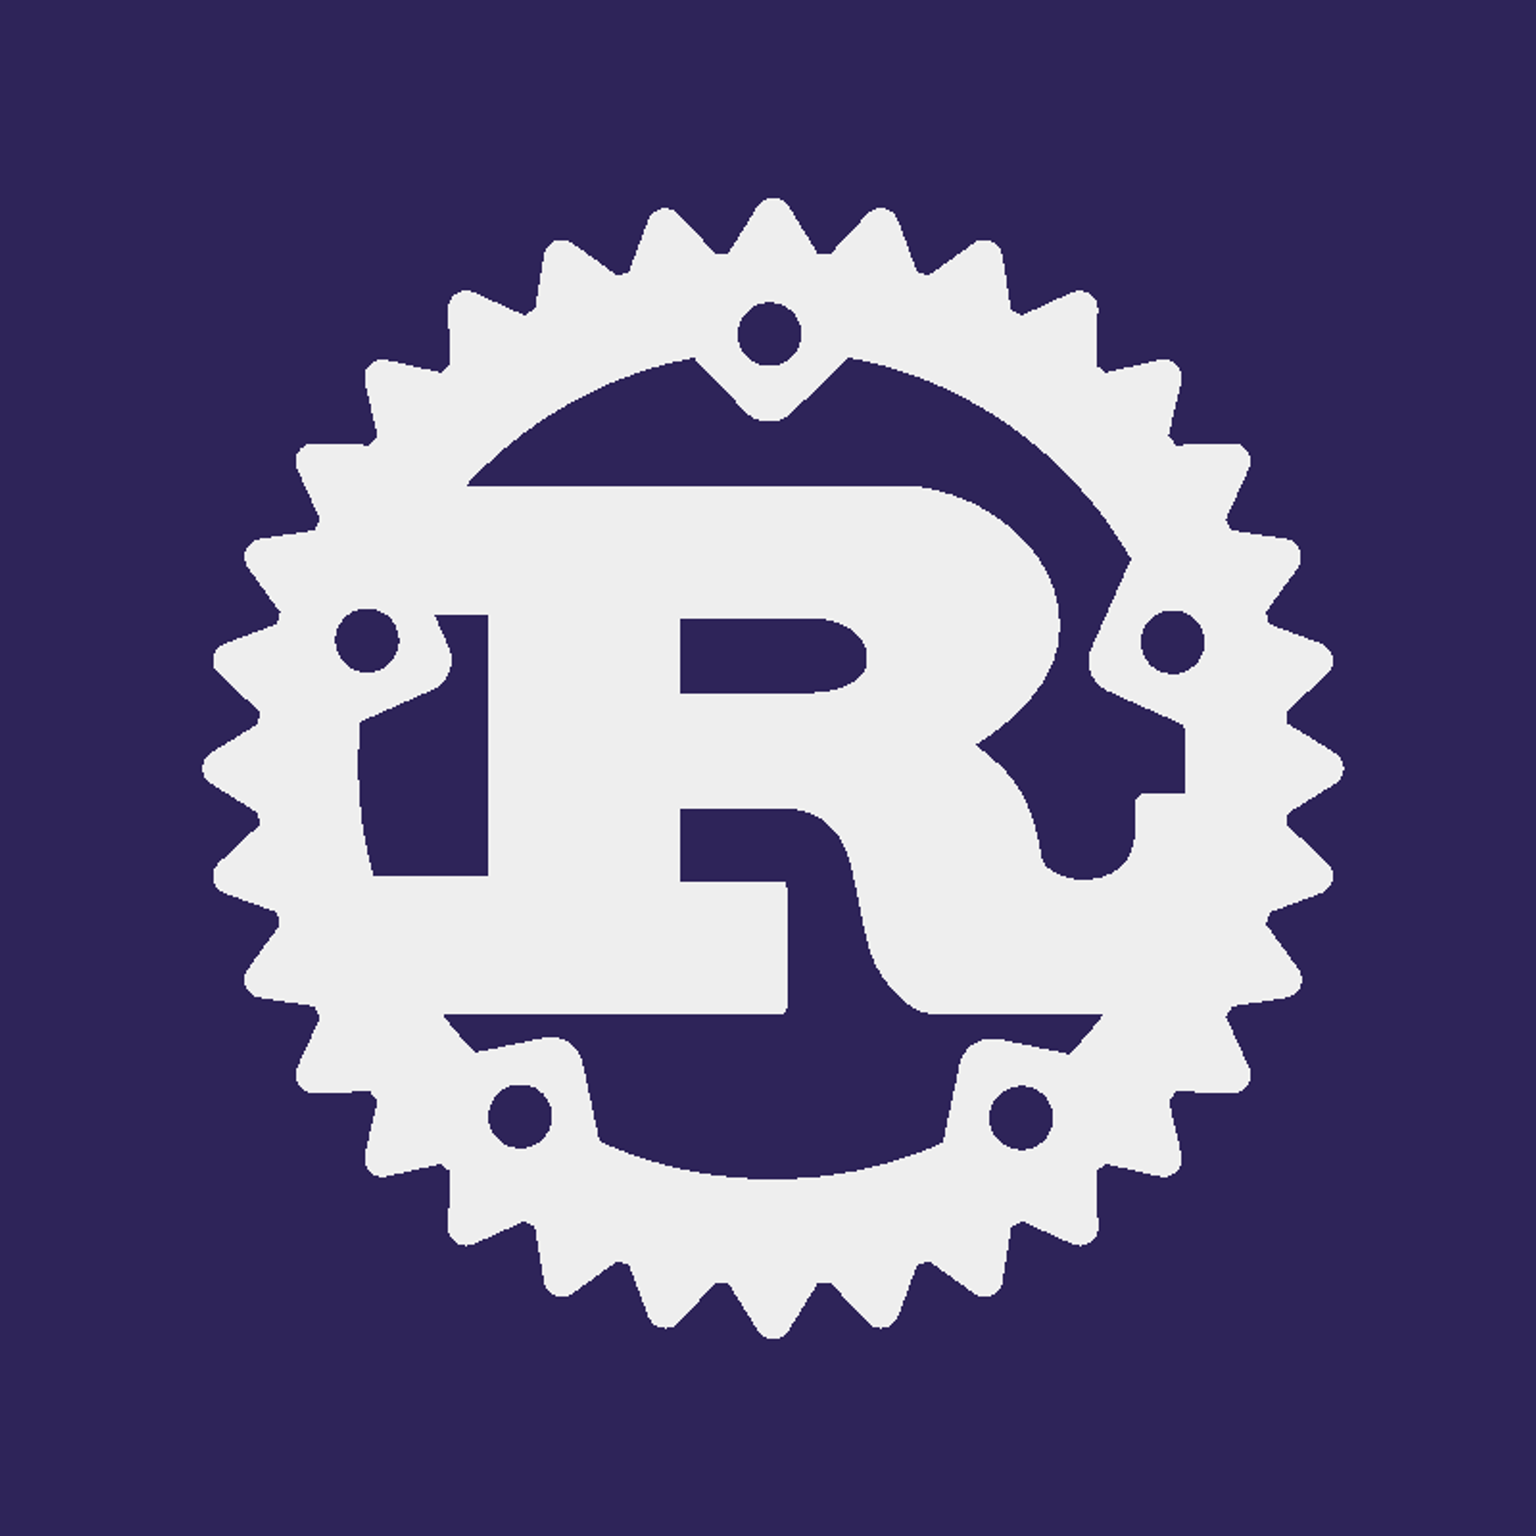 Rust logo on purple background